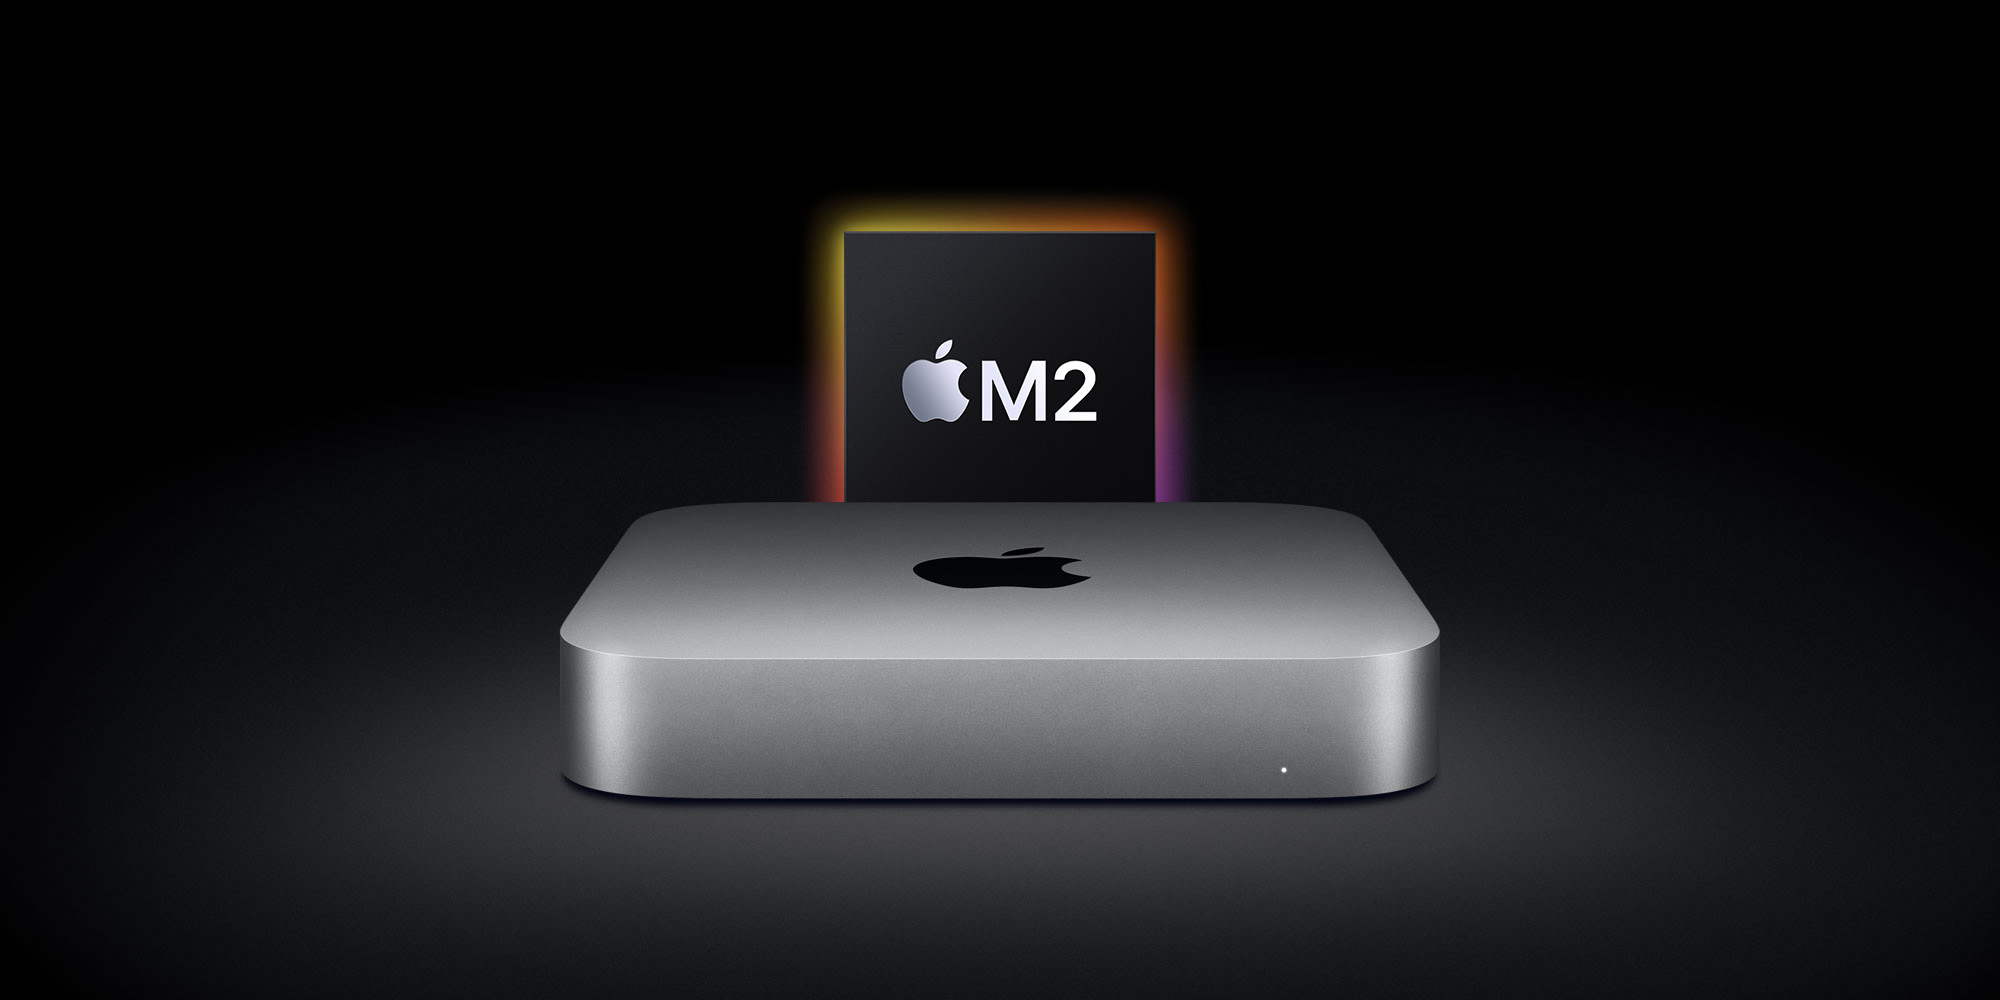 Apple announces new Mac mini featuring Apple M1 chip, cheaper $699 price -  9to5Mac